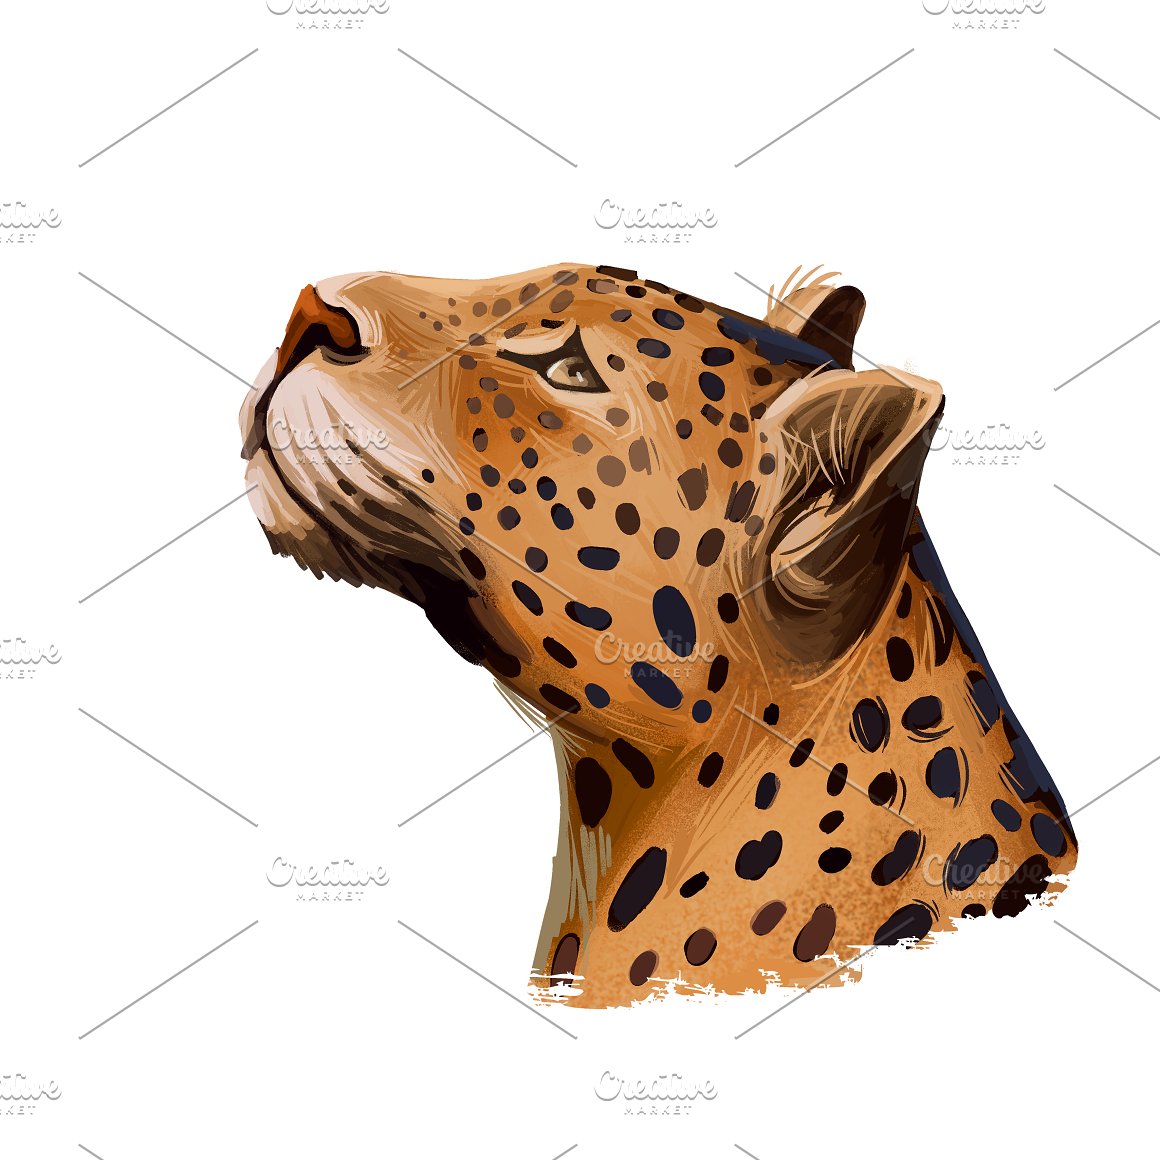 Leopard head.